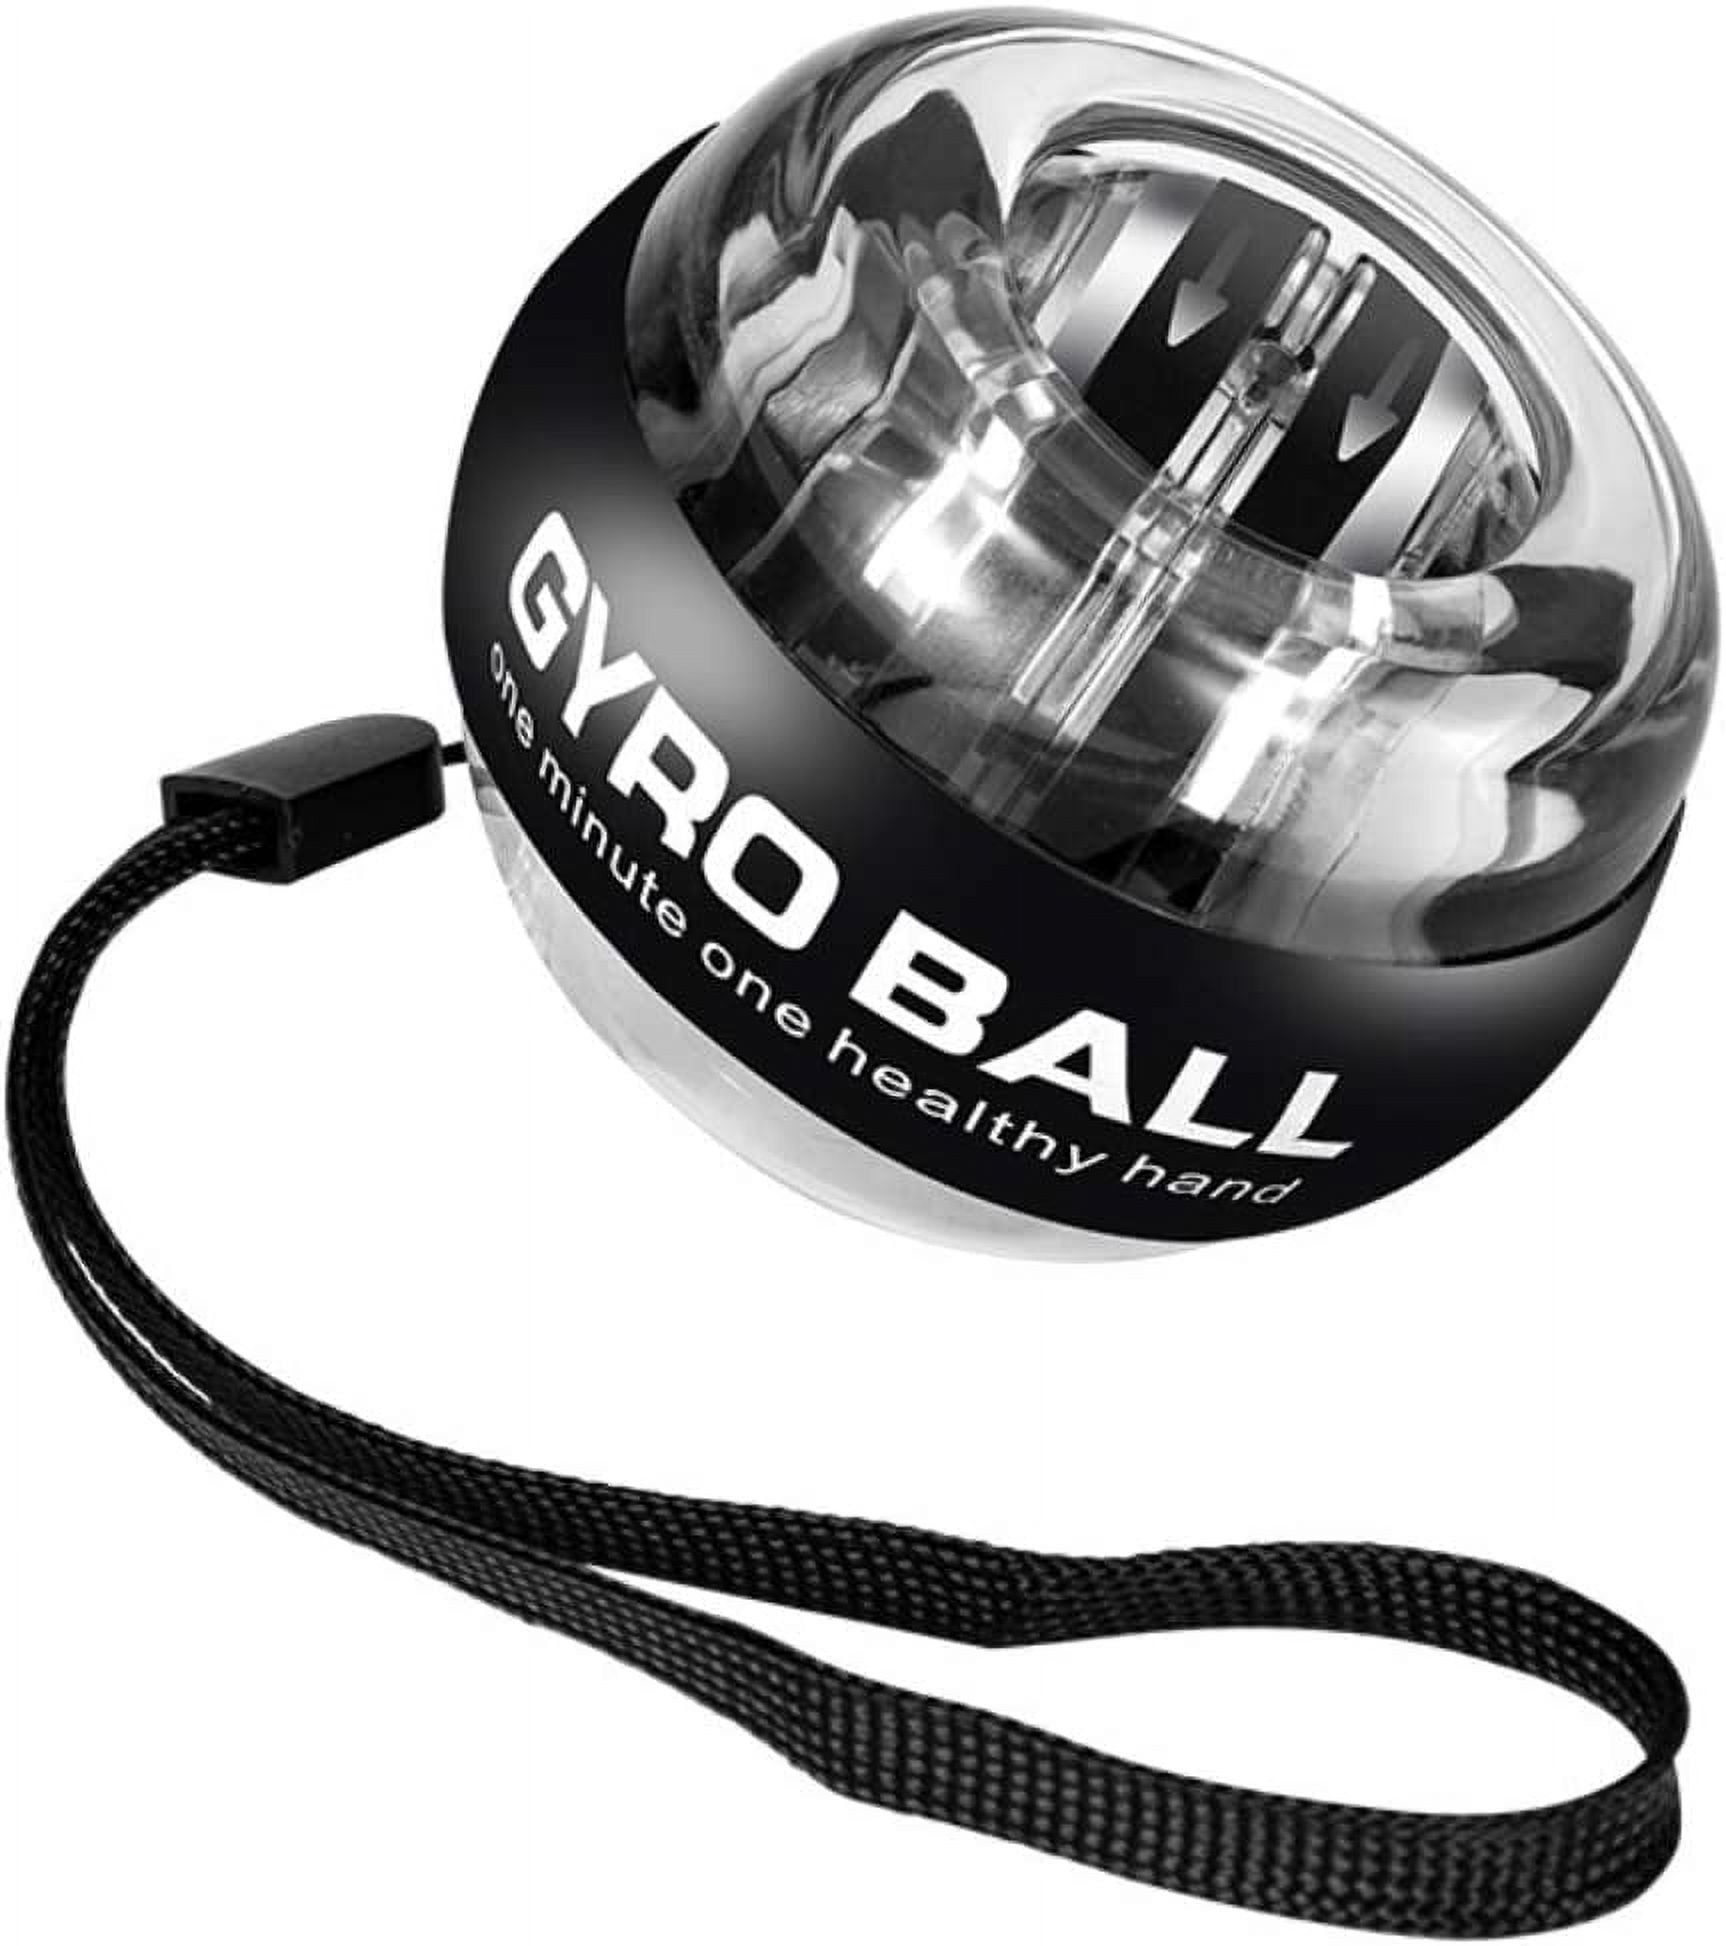 GOZATO Auto-Start Wrist Power Gyro Ball, Wrist Strengthener and